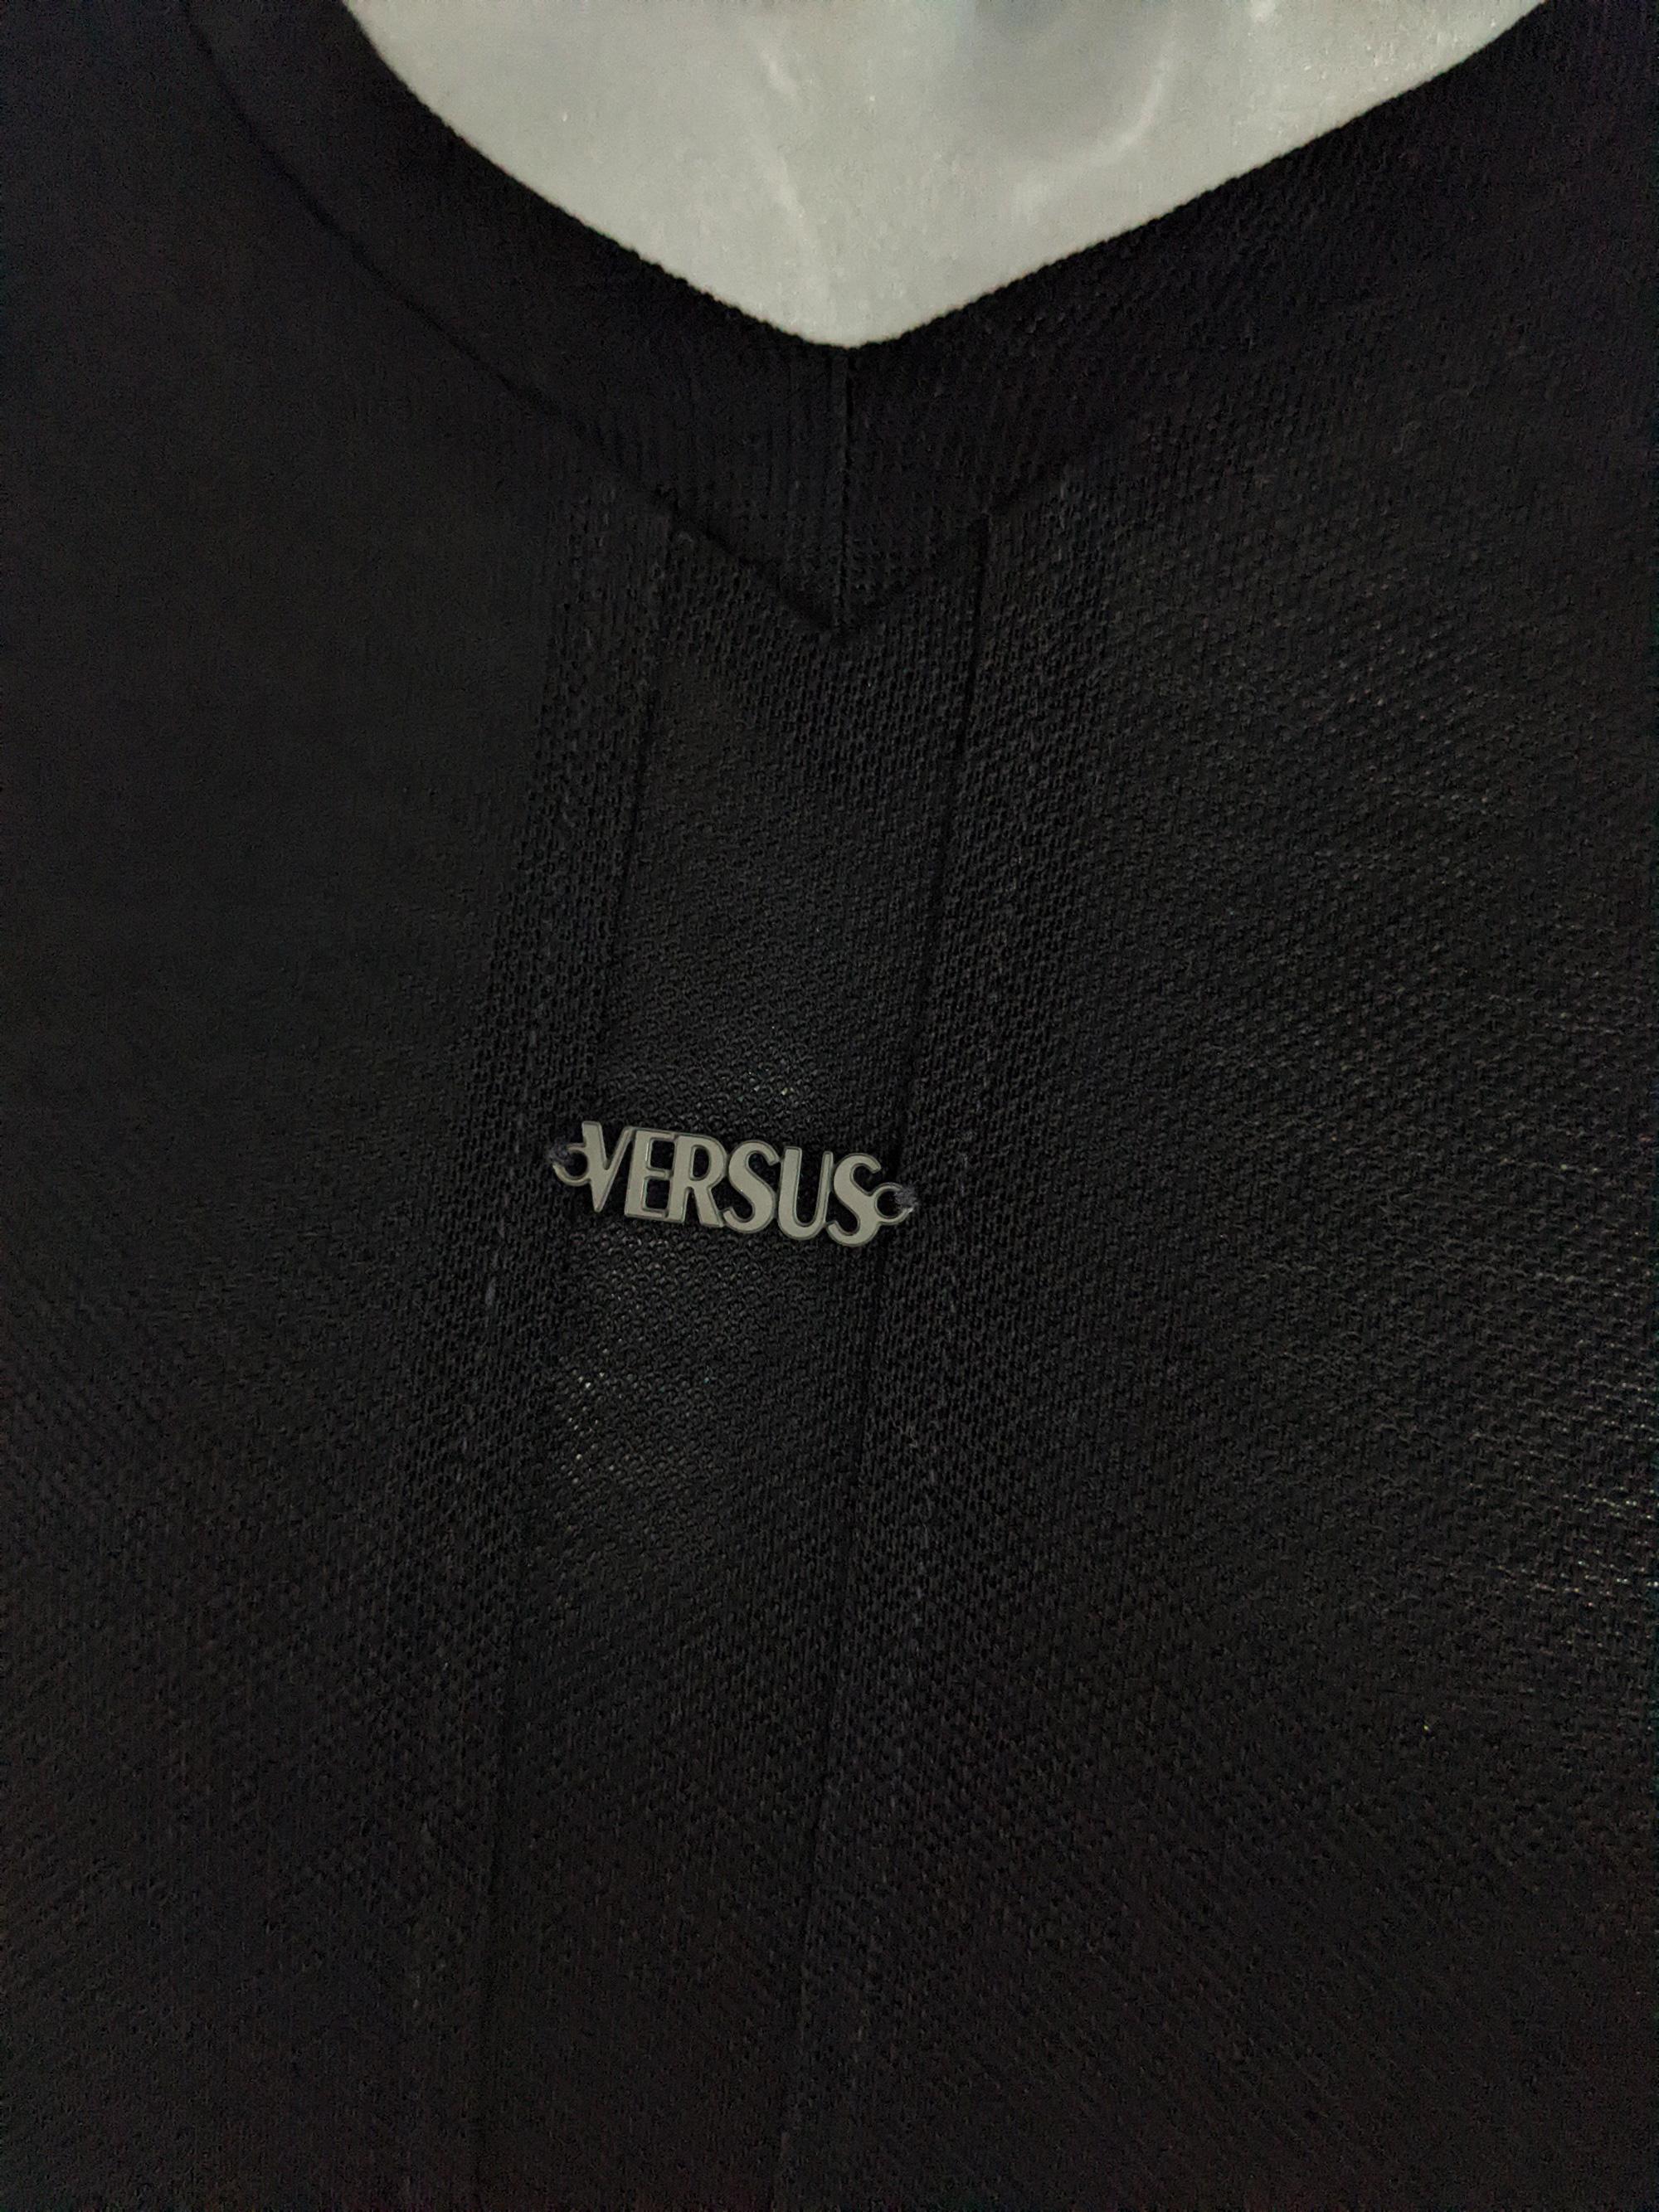 Versus Versace Vintage 2000s Black Mesh Shirt Long Sleeve Top Y2K Party Shirt For Sale 2